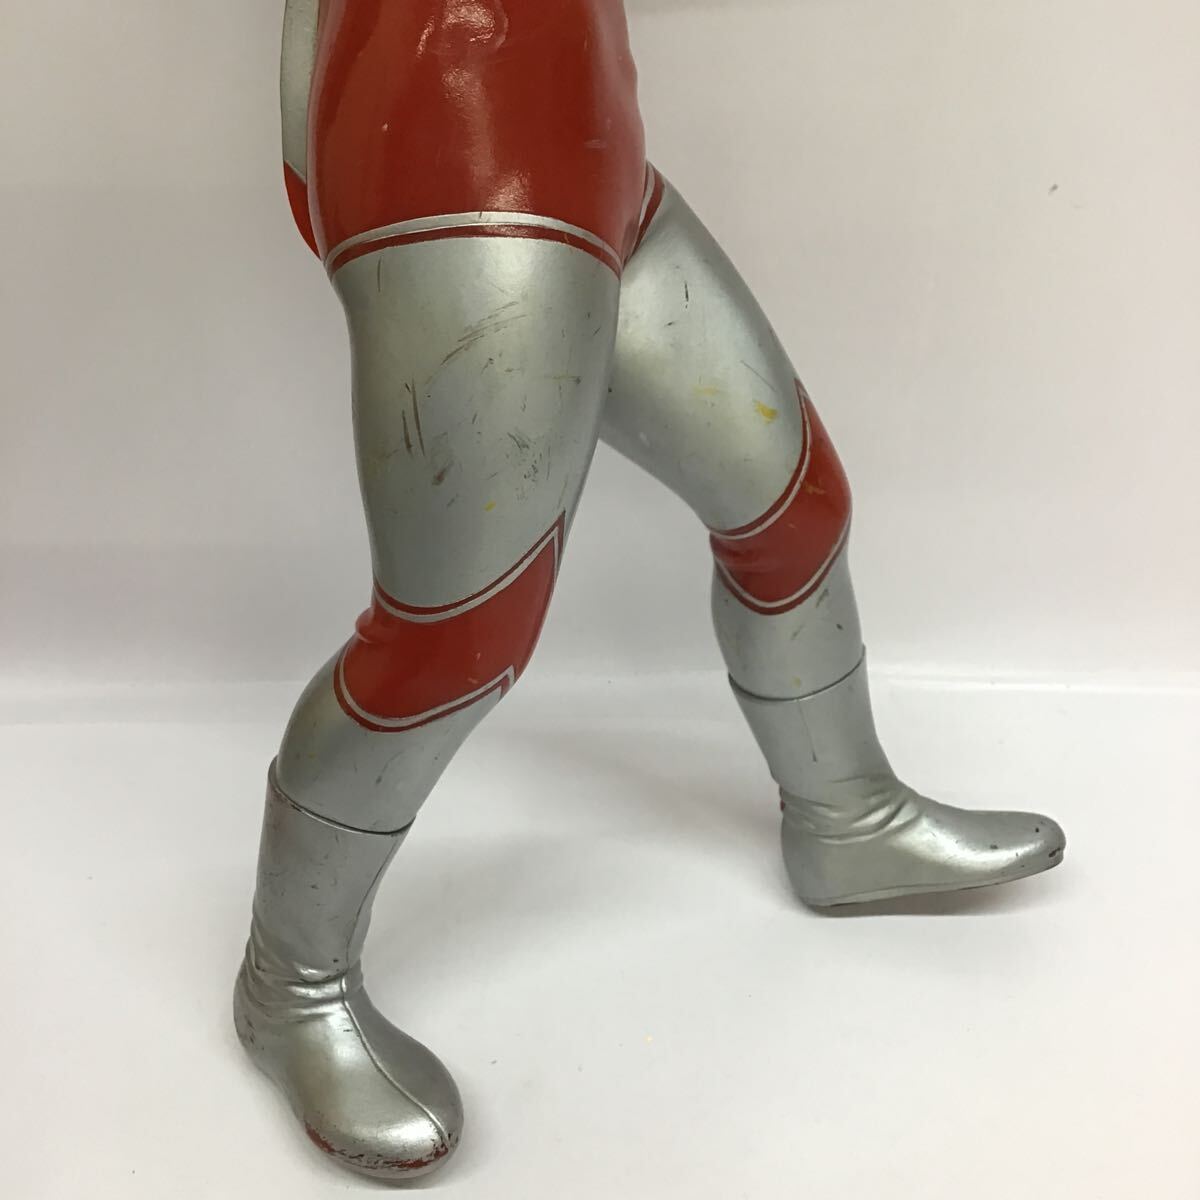  Ultraman Jack Return of Ultraman Bick sofvi фигурка [ б/у ]